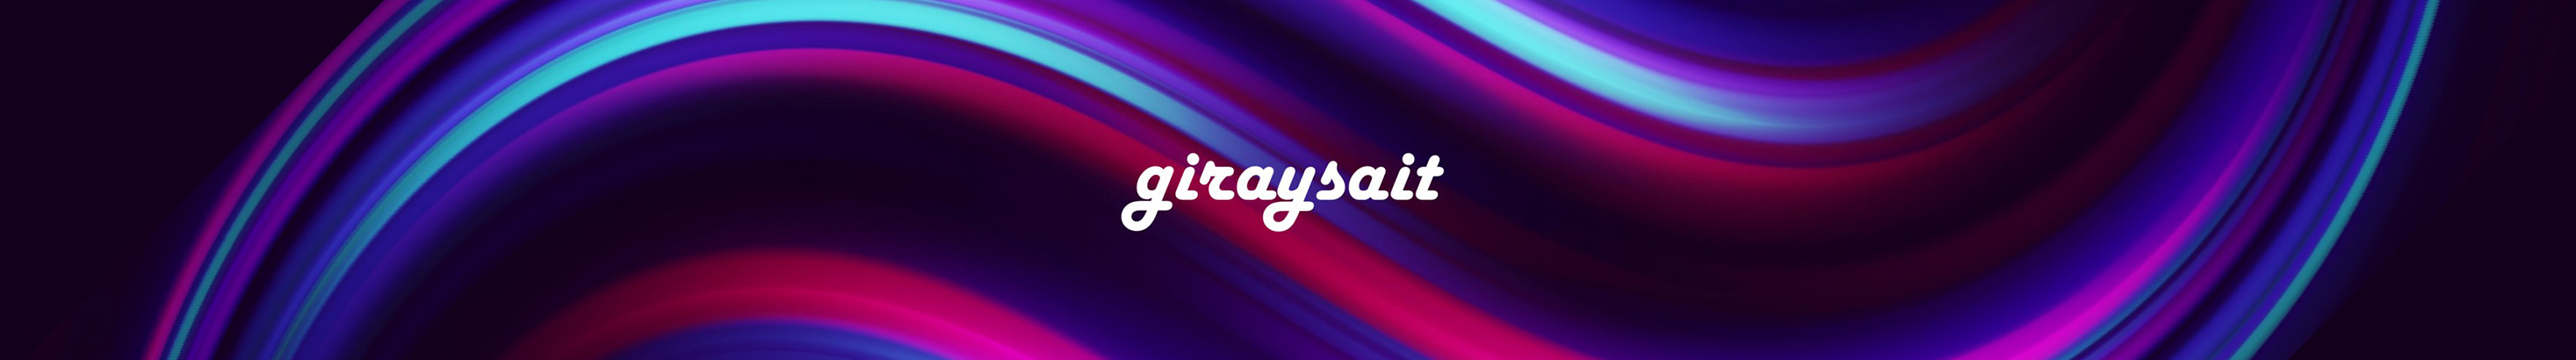 giray sait's profile banner